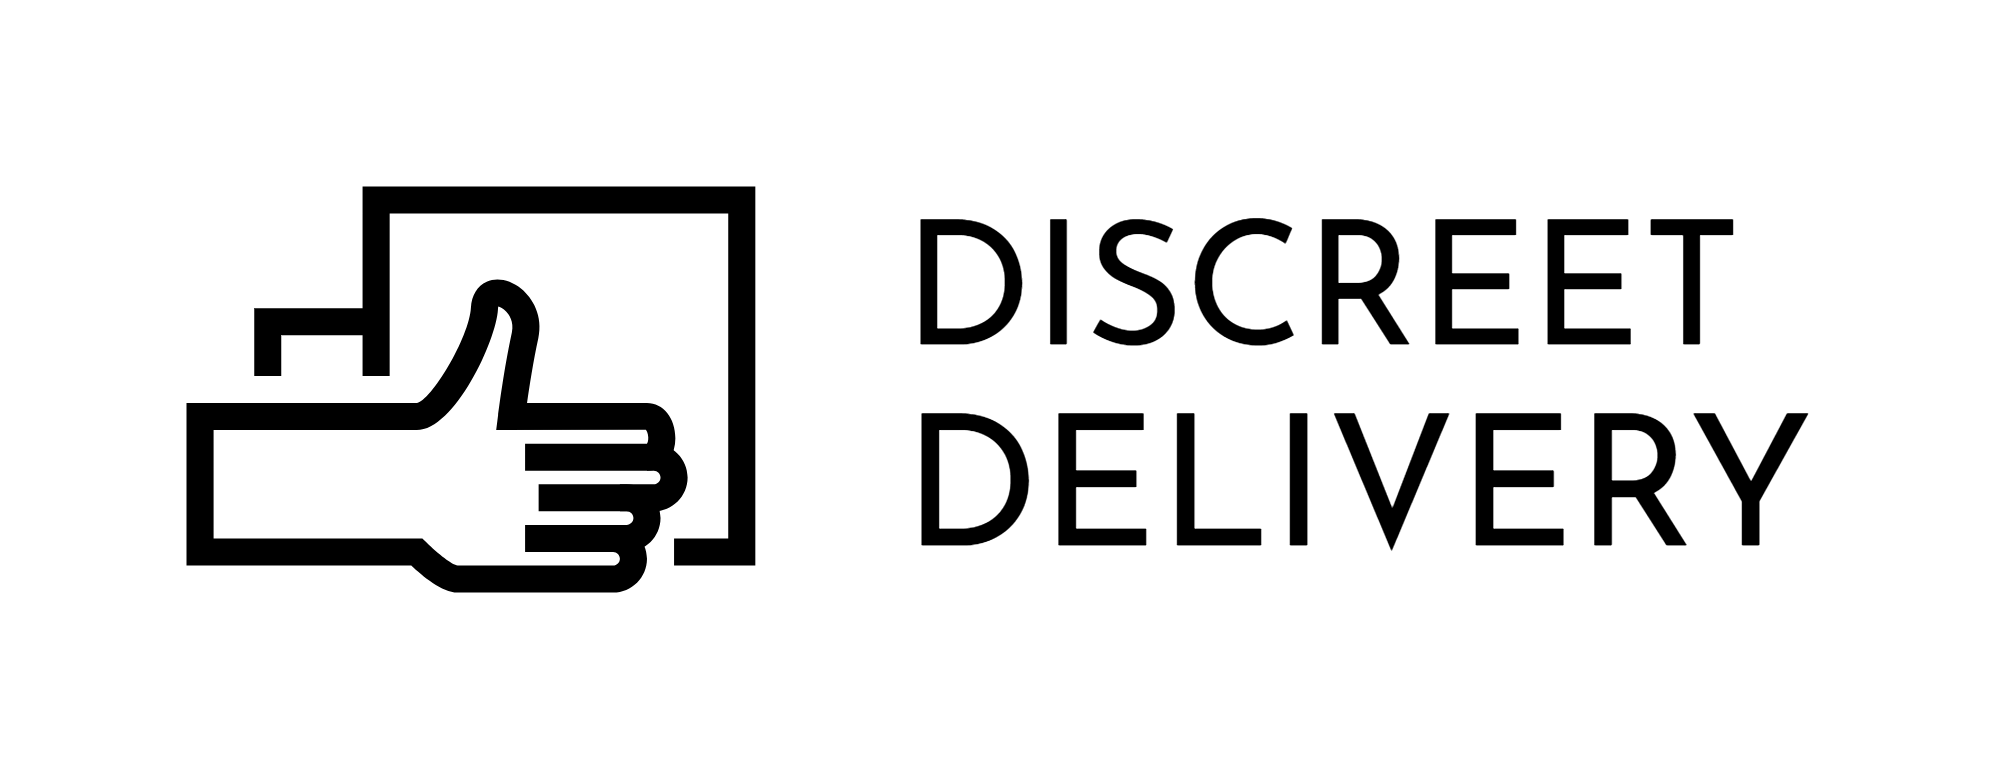 DISCREET-logo.png